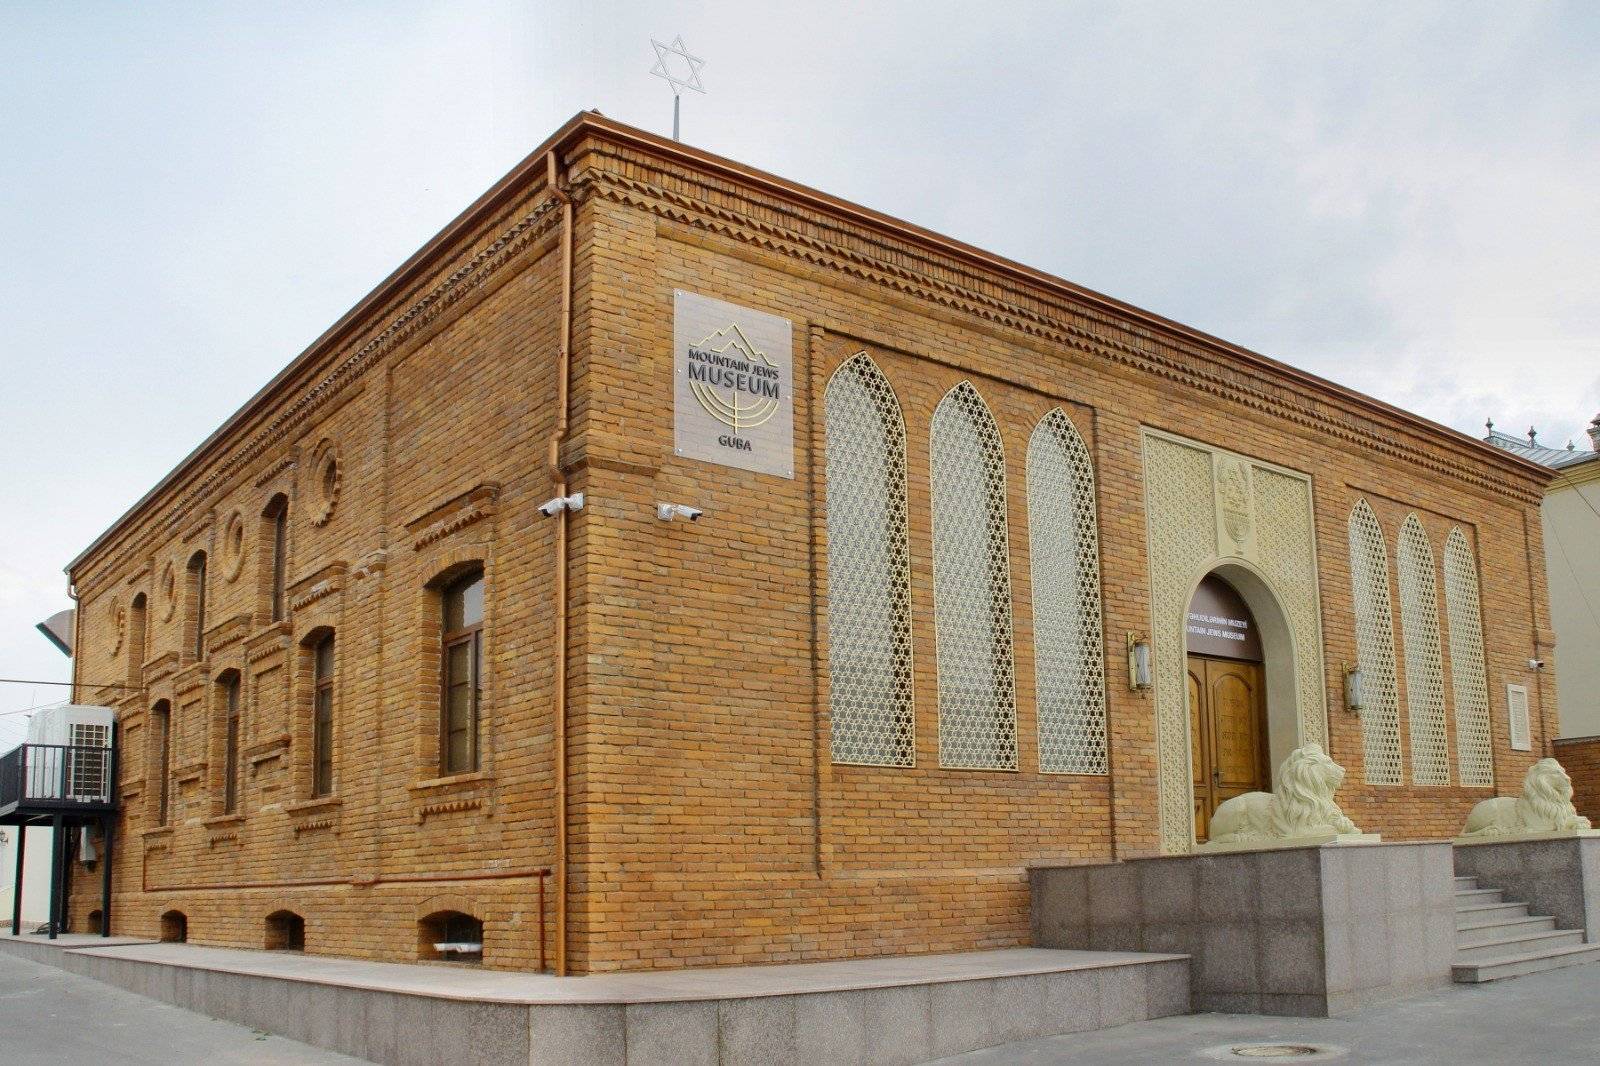 Museum der Bergjuden in Aserbaidschan — Guba